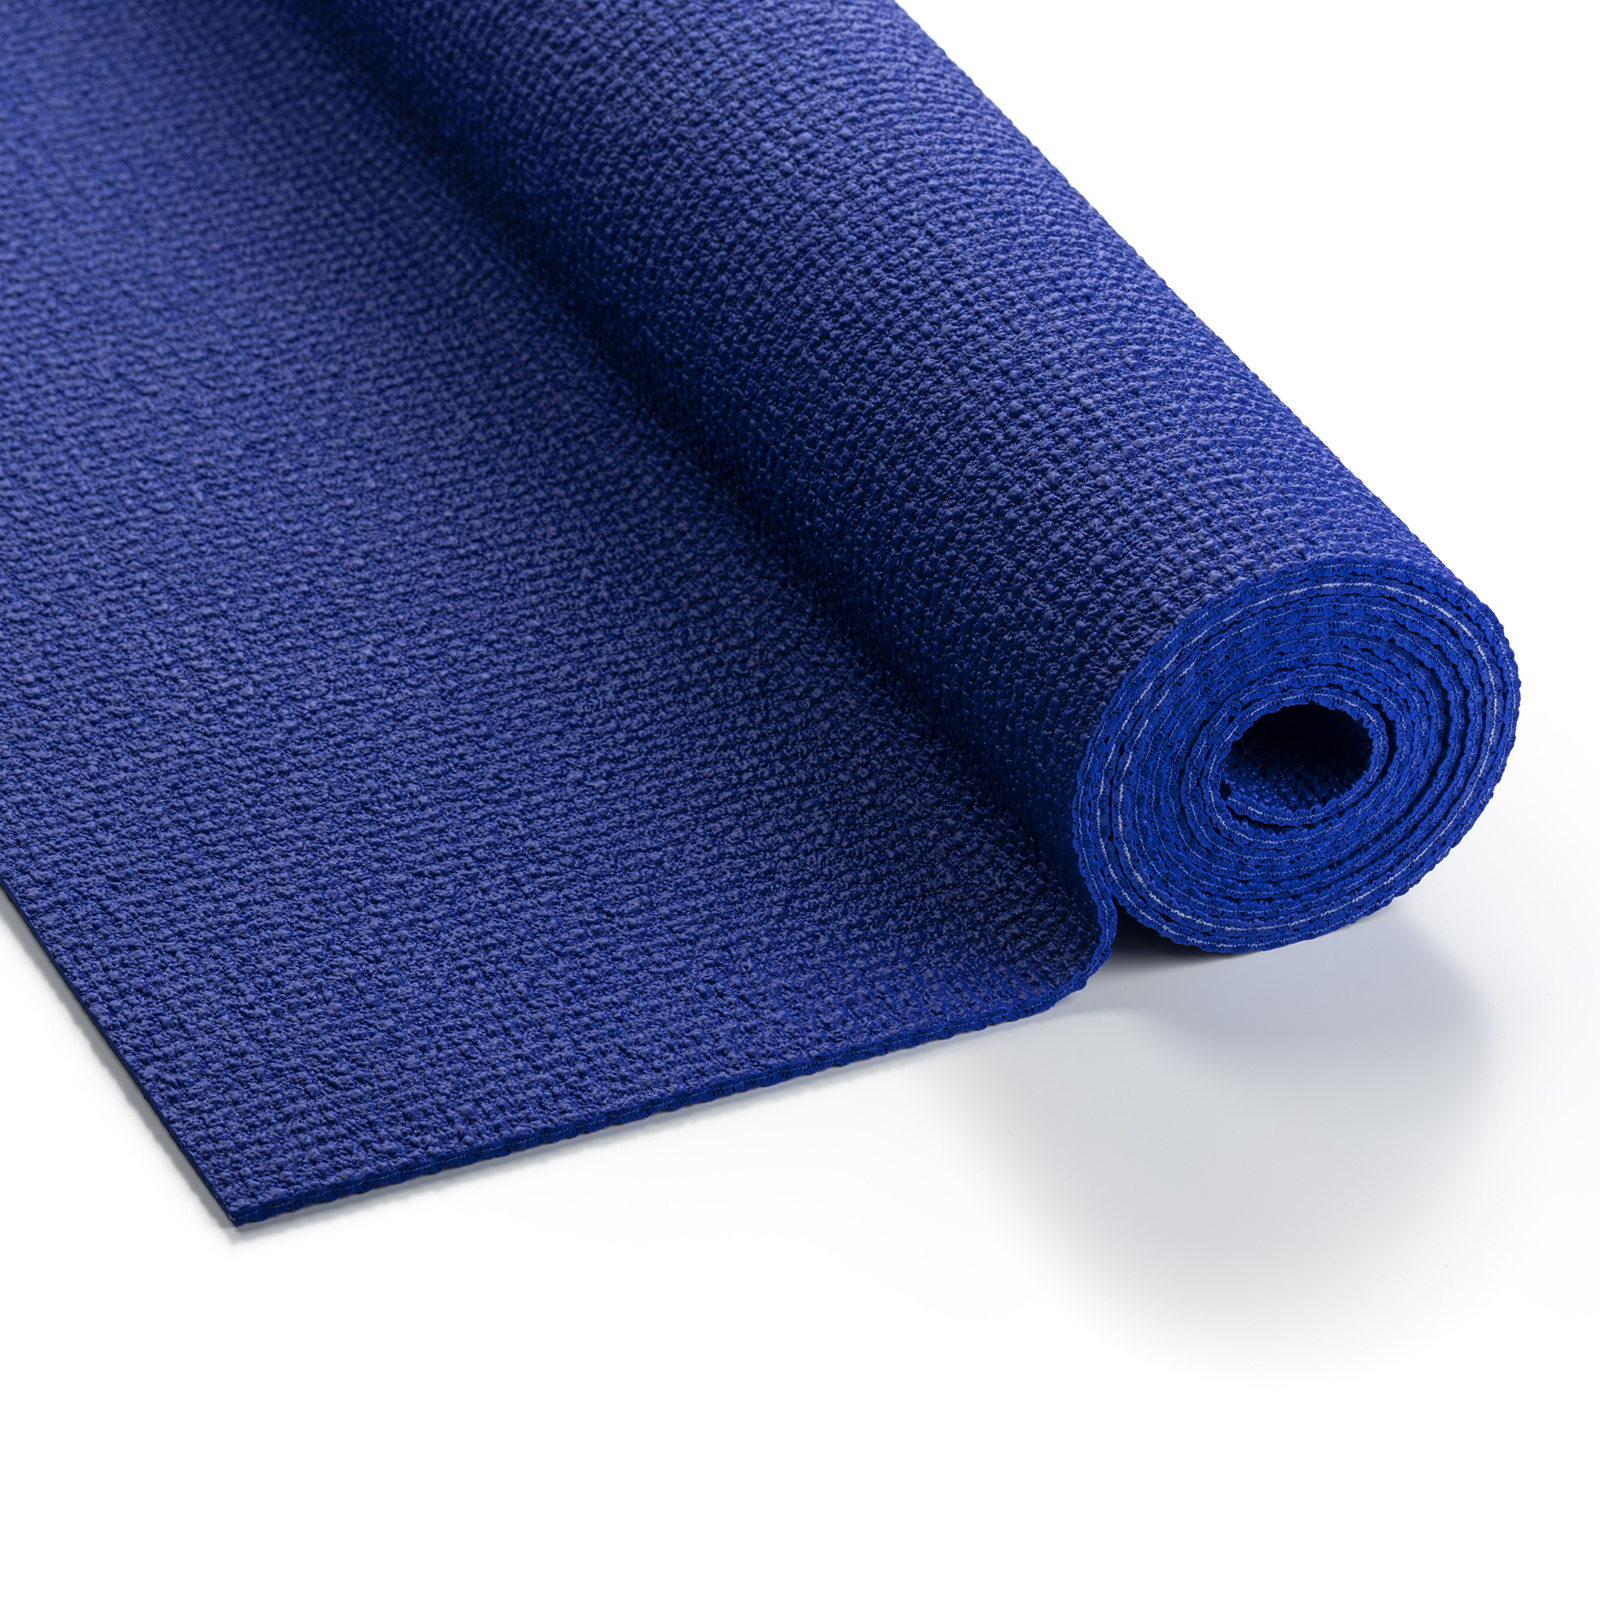 Yoga Grip Dot Towel by ekotex 